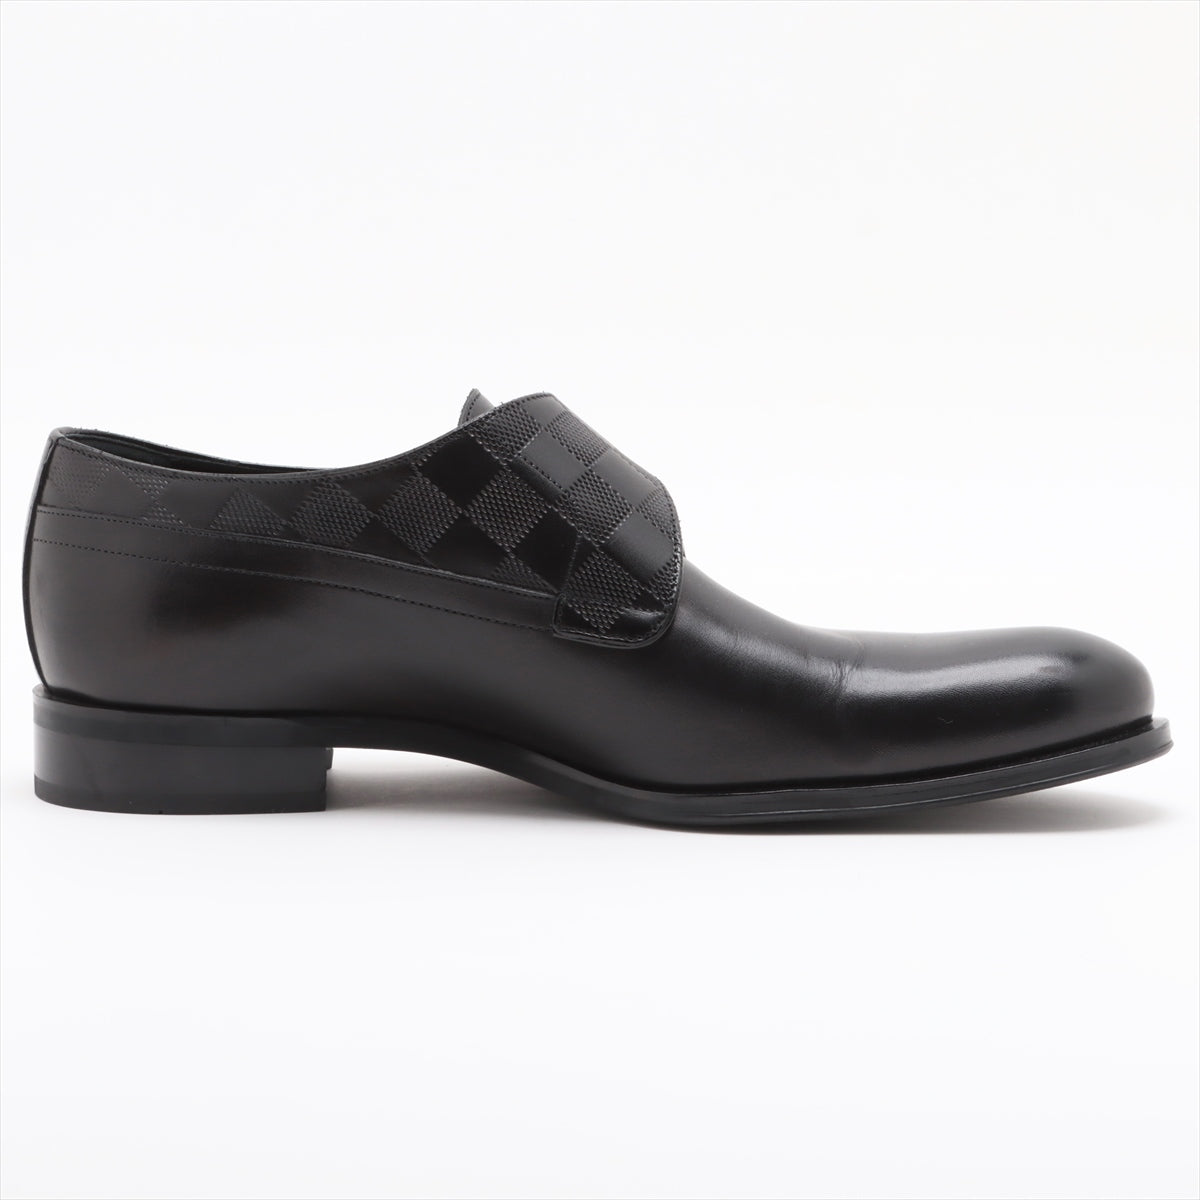 Louis Vuitton 17 years Leather Leather shoes 6 Men's Black ST0137 Damier Single monk strap